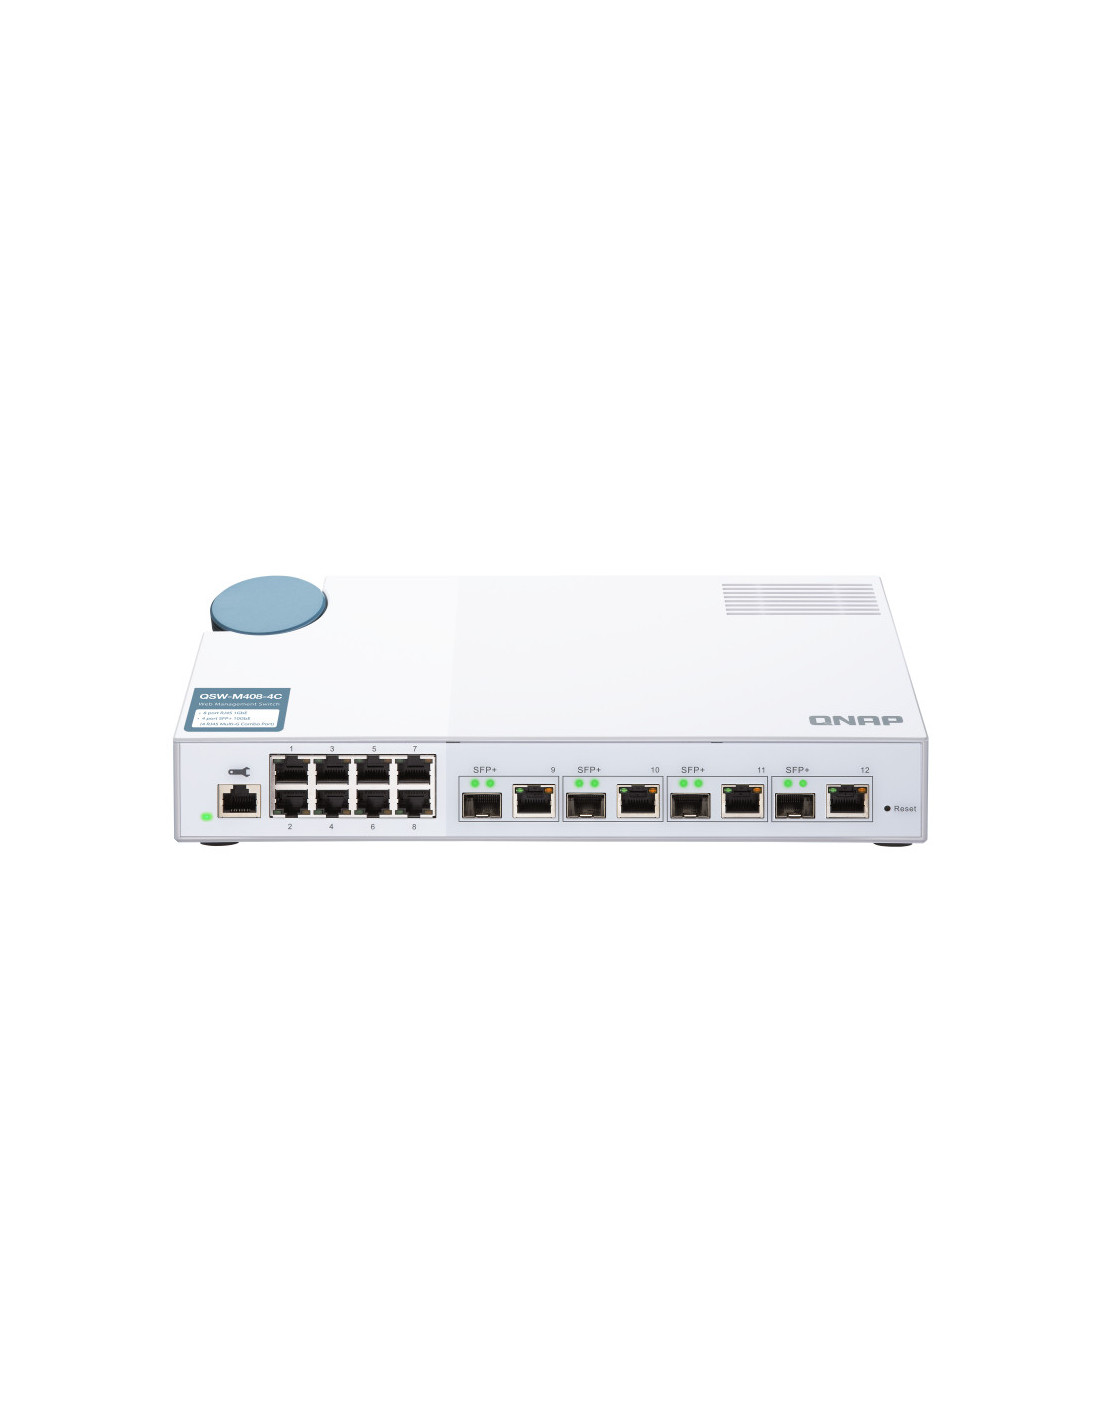  QSW-M408-4C Switch 10GbE - 12 puertos (8 RJ45, 4 combo SFP+ RJ45), agregación de puertos 802.3ad